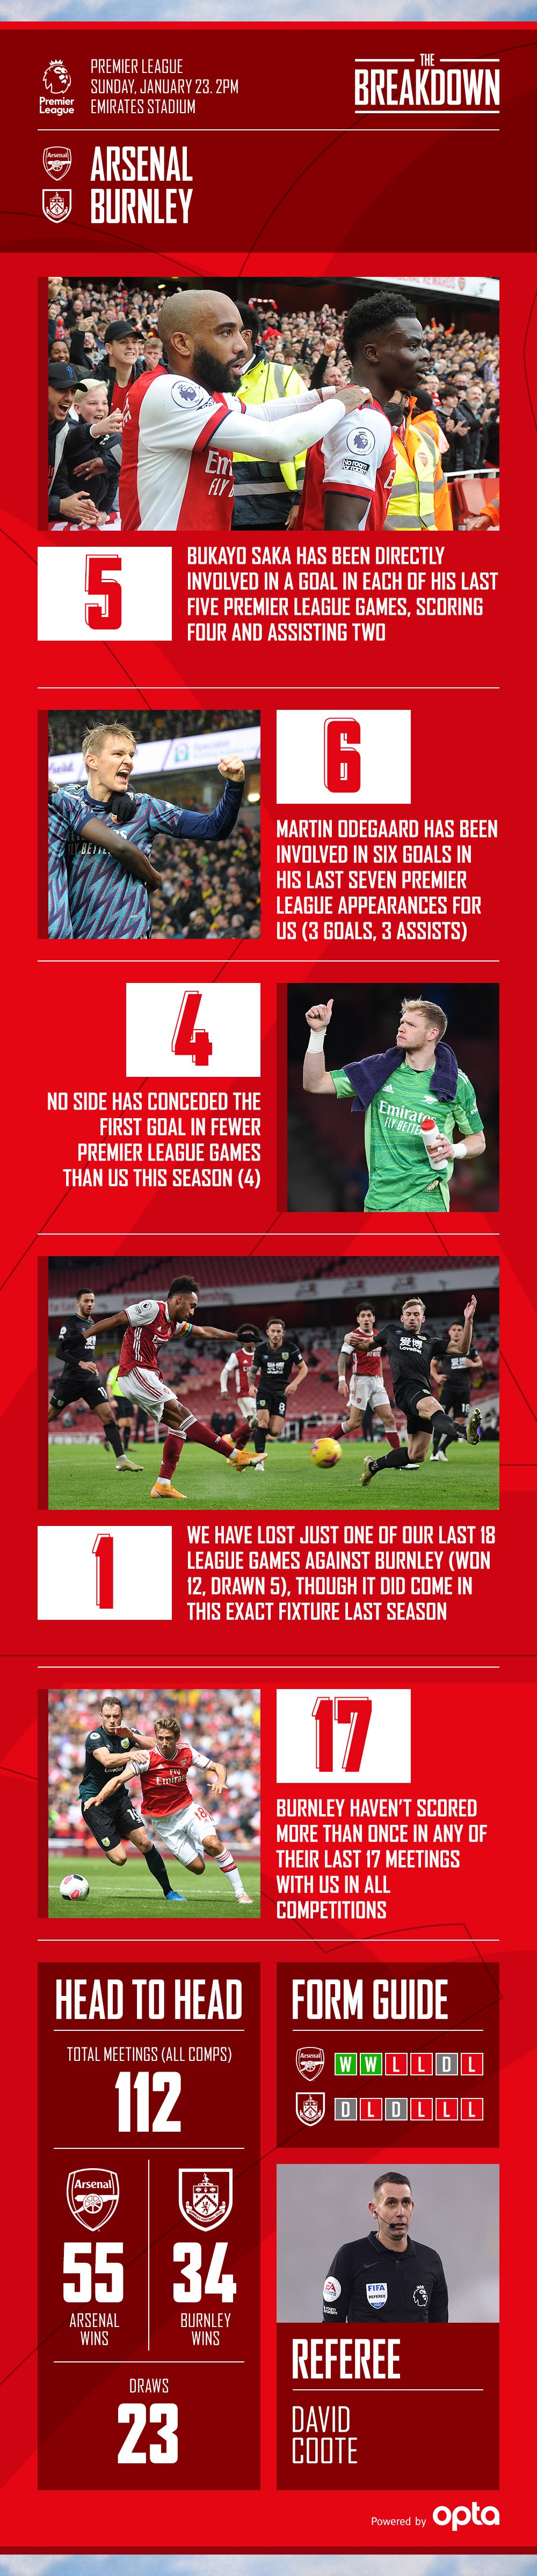 Arsenal Vs Burnley Breakdown